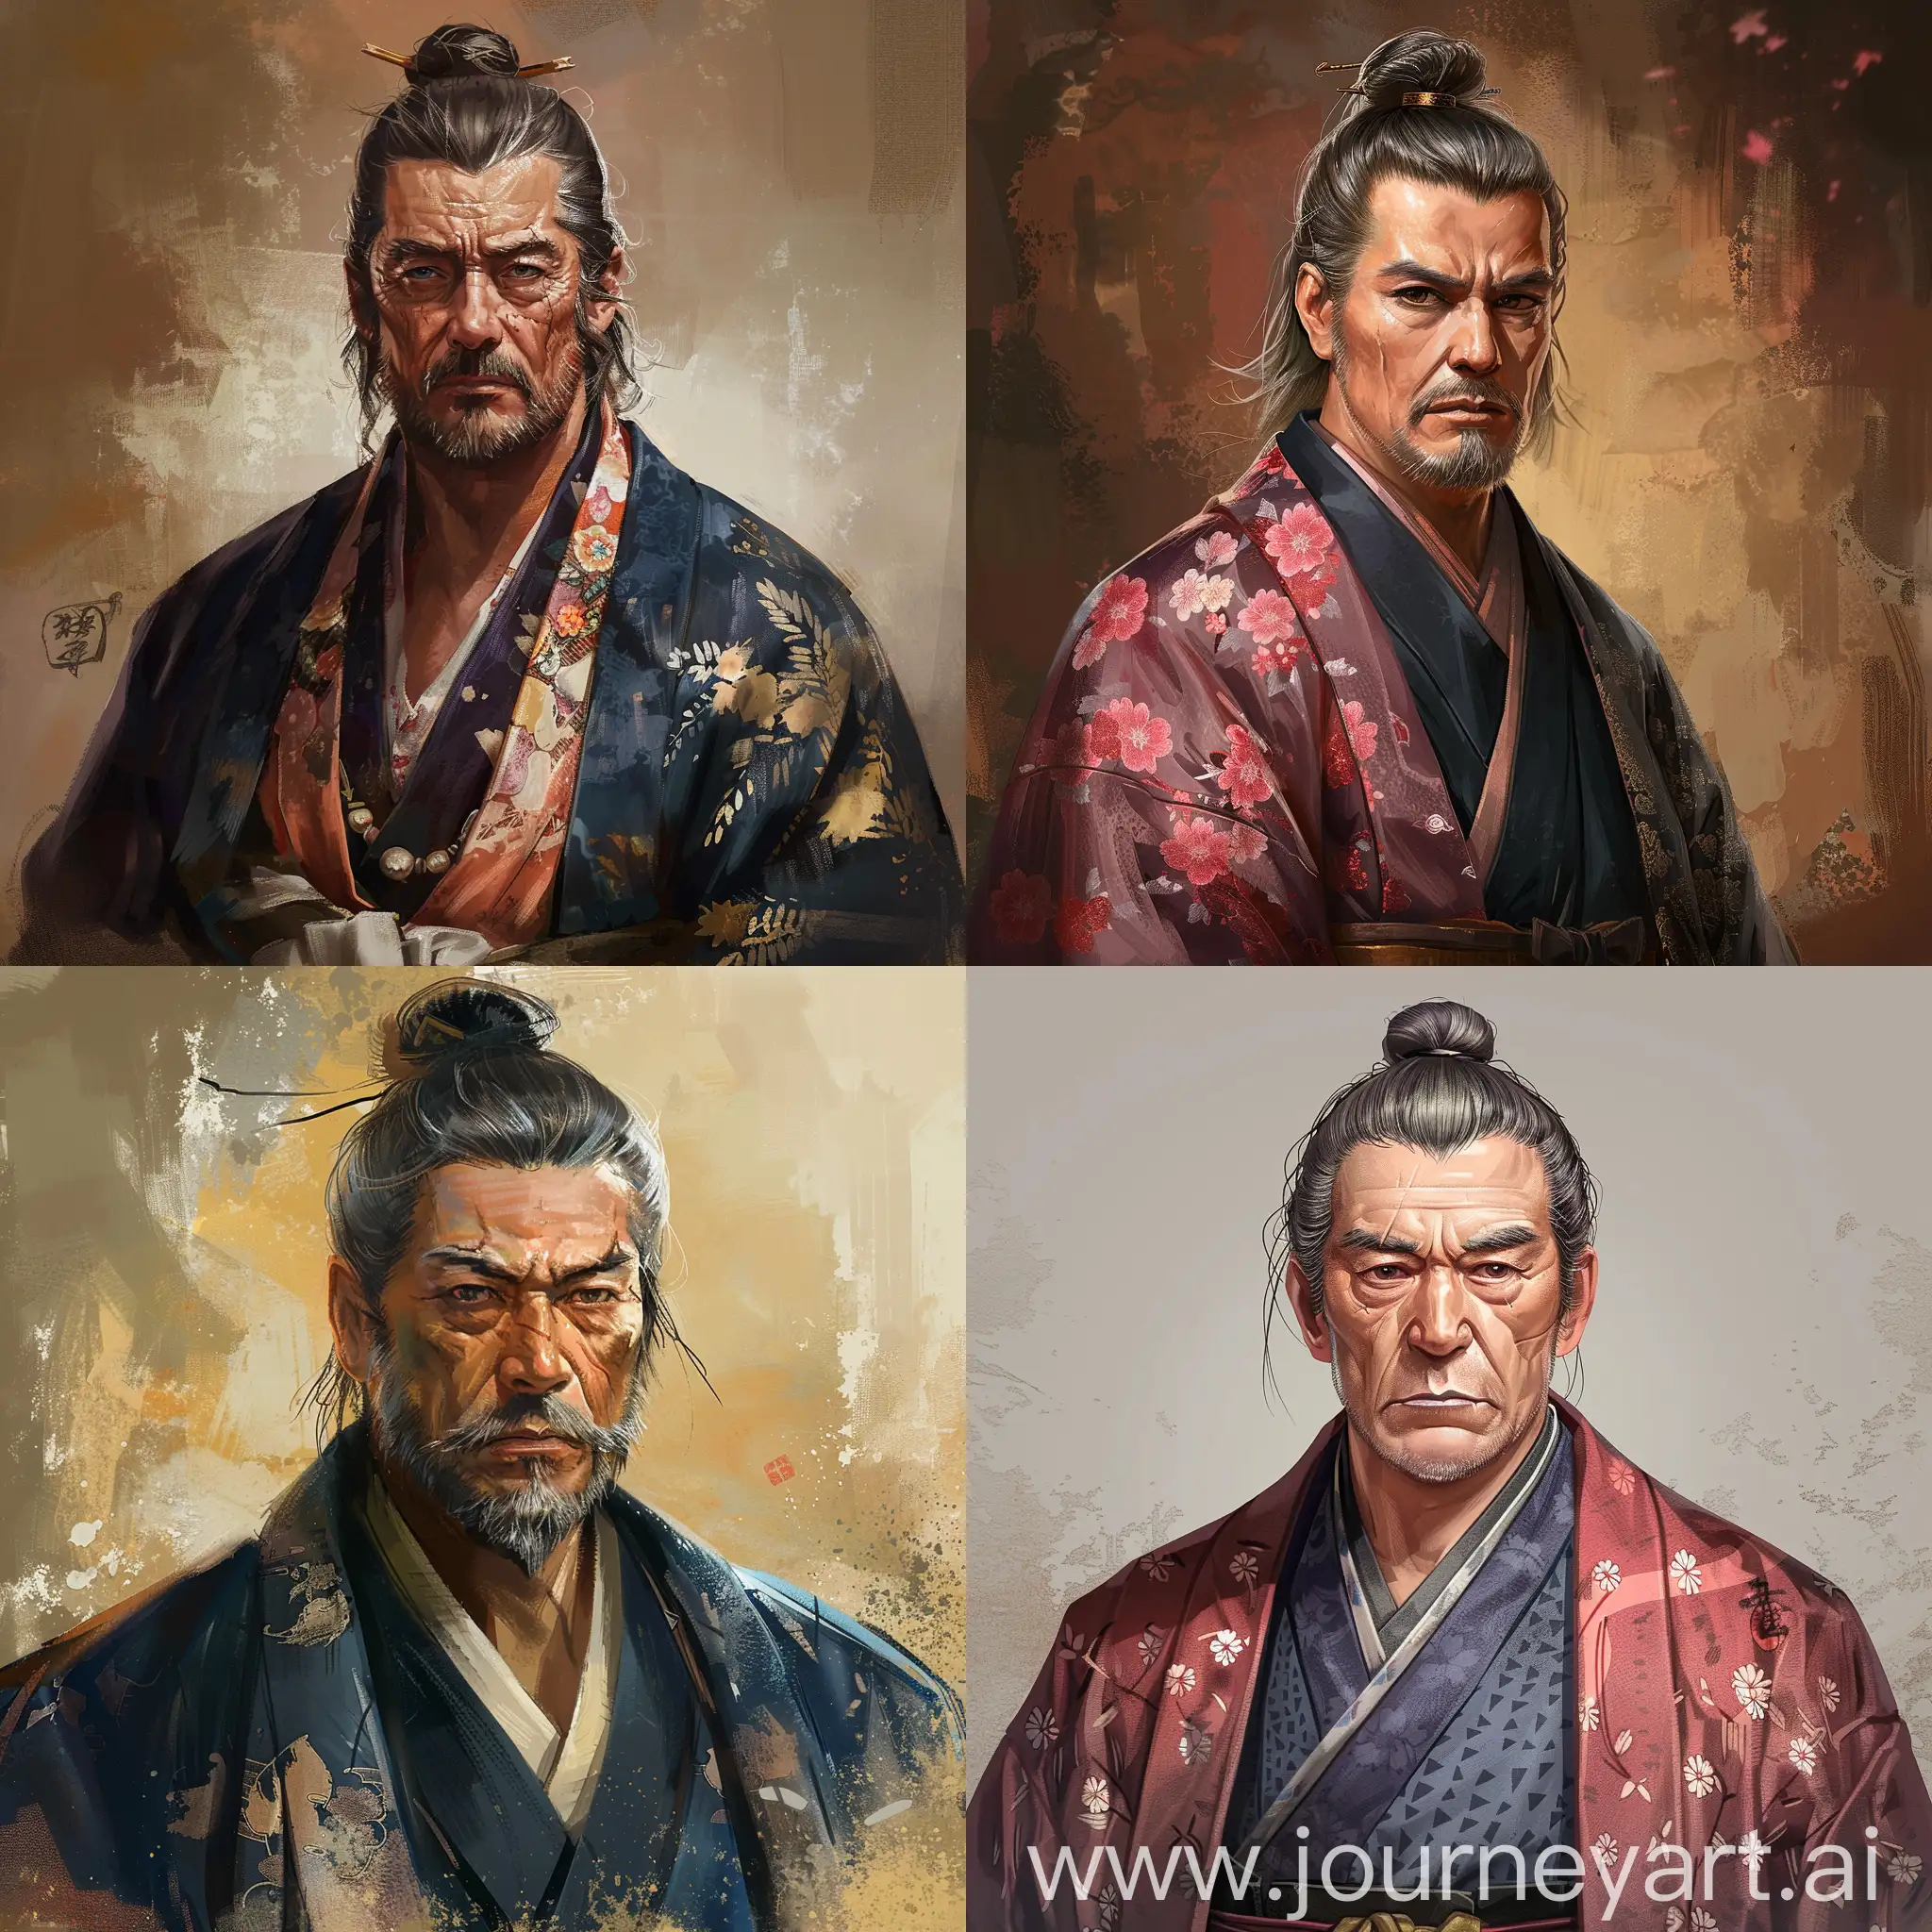 A portrait of a sengoku jidai middle aged samurai in kimono in the style of Nobunaga's Ambition character portraits